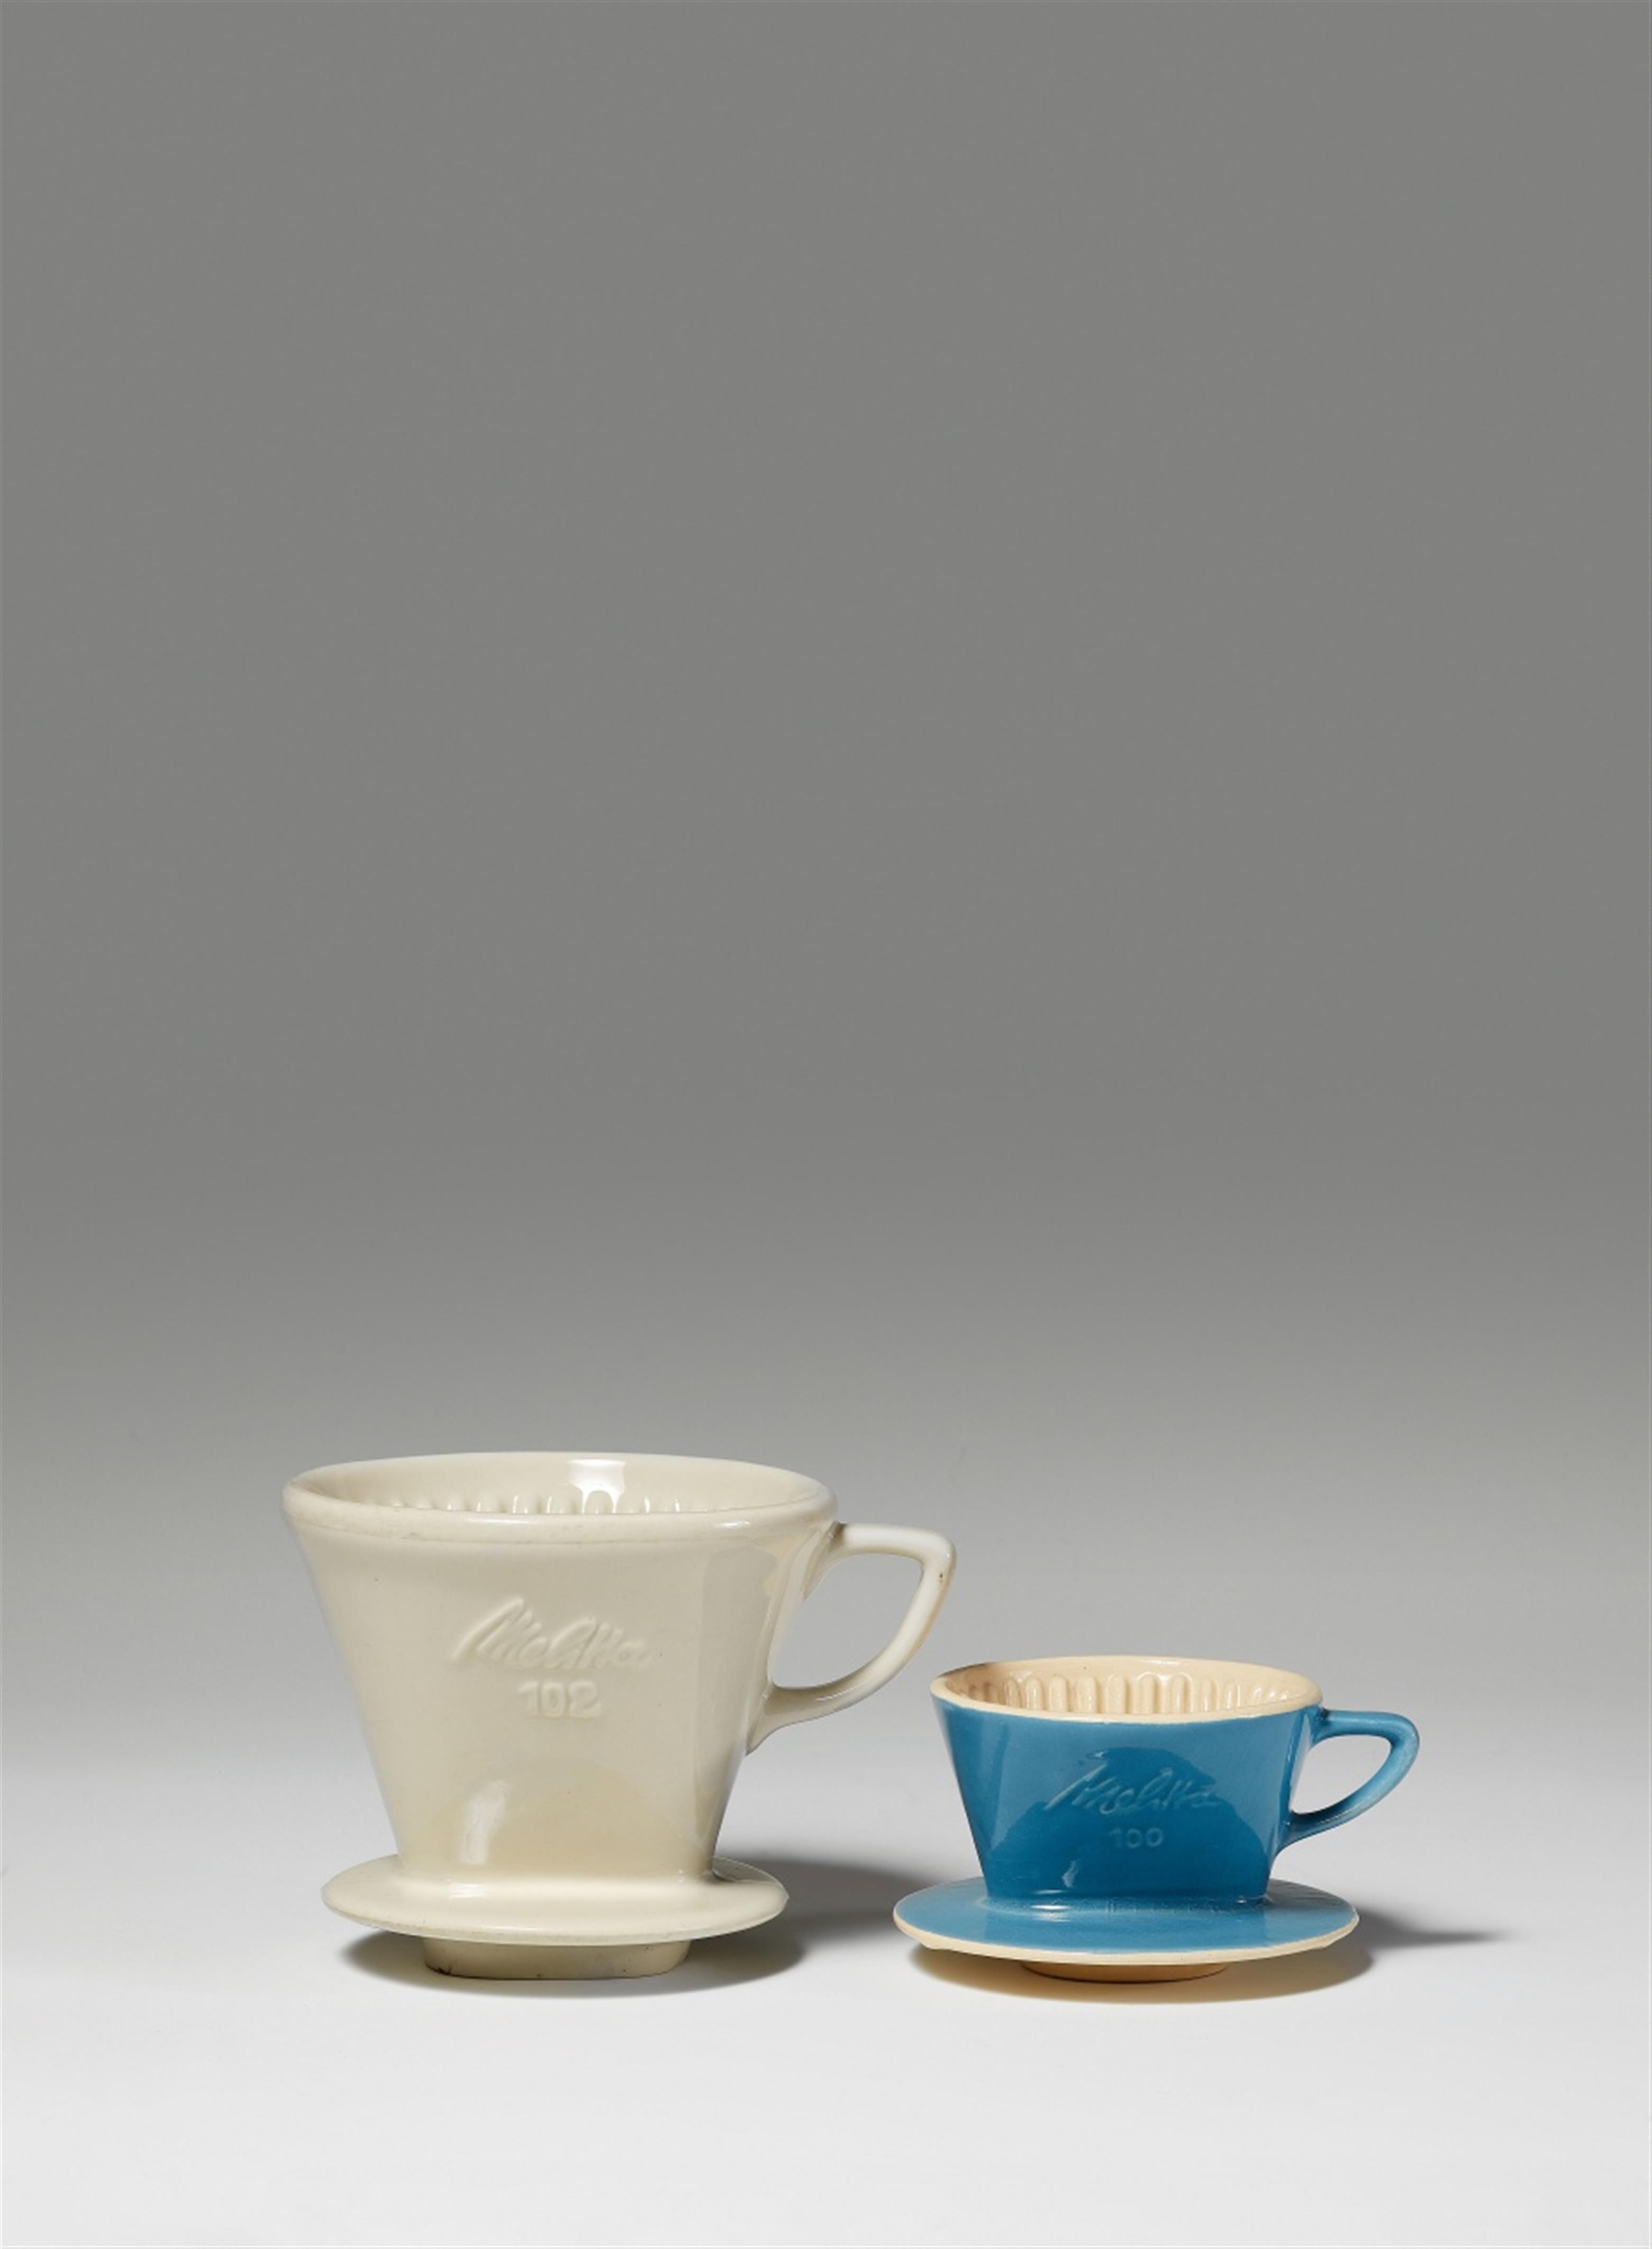 Paar Melitta Kaffeefilter in Tassenform - image-1